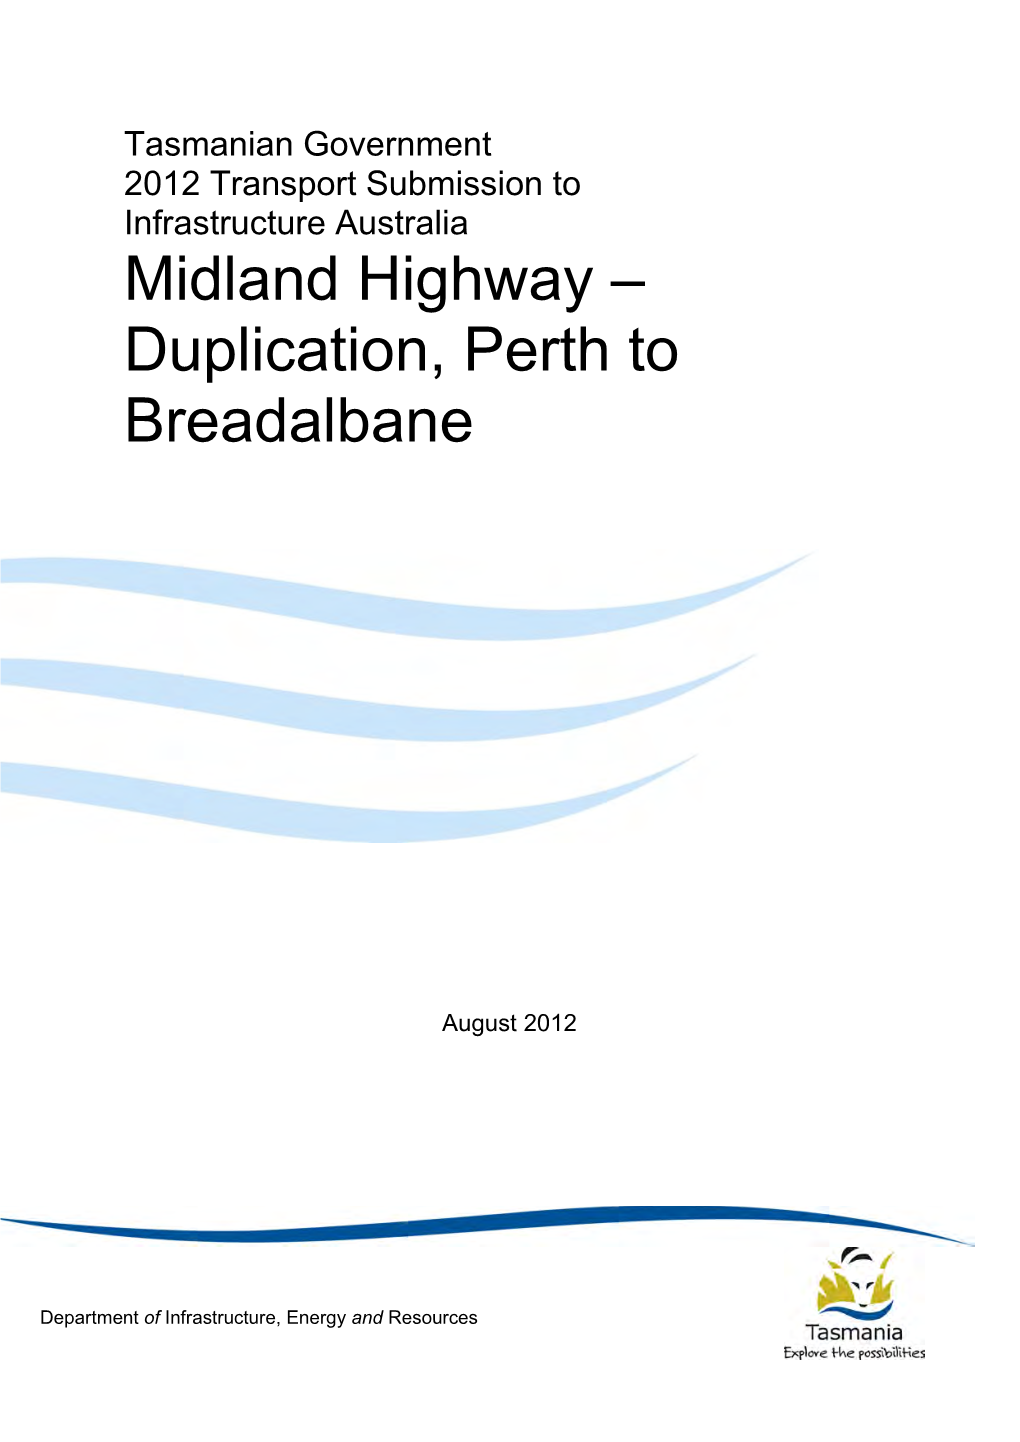 Midland Highway – Duplication, Perth to Breadalbane